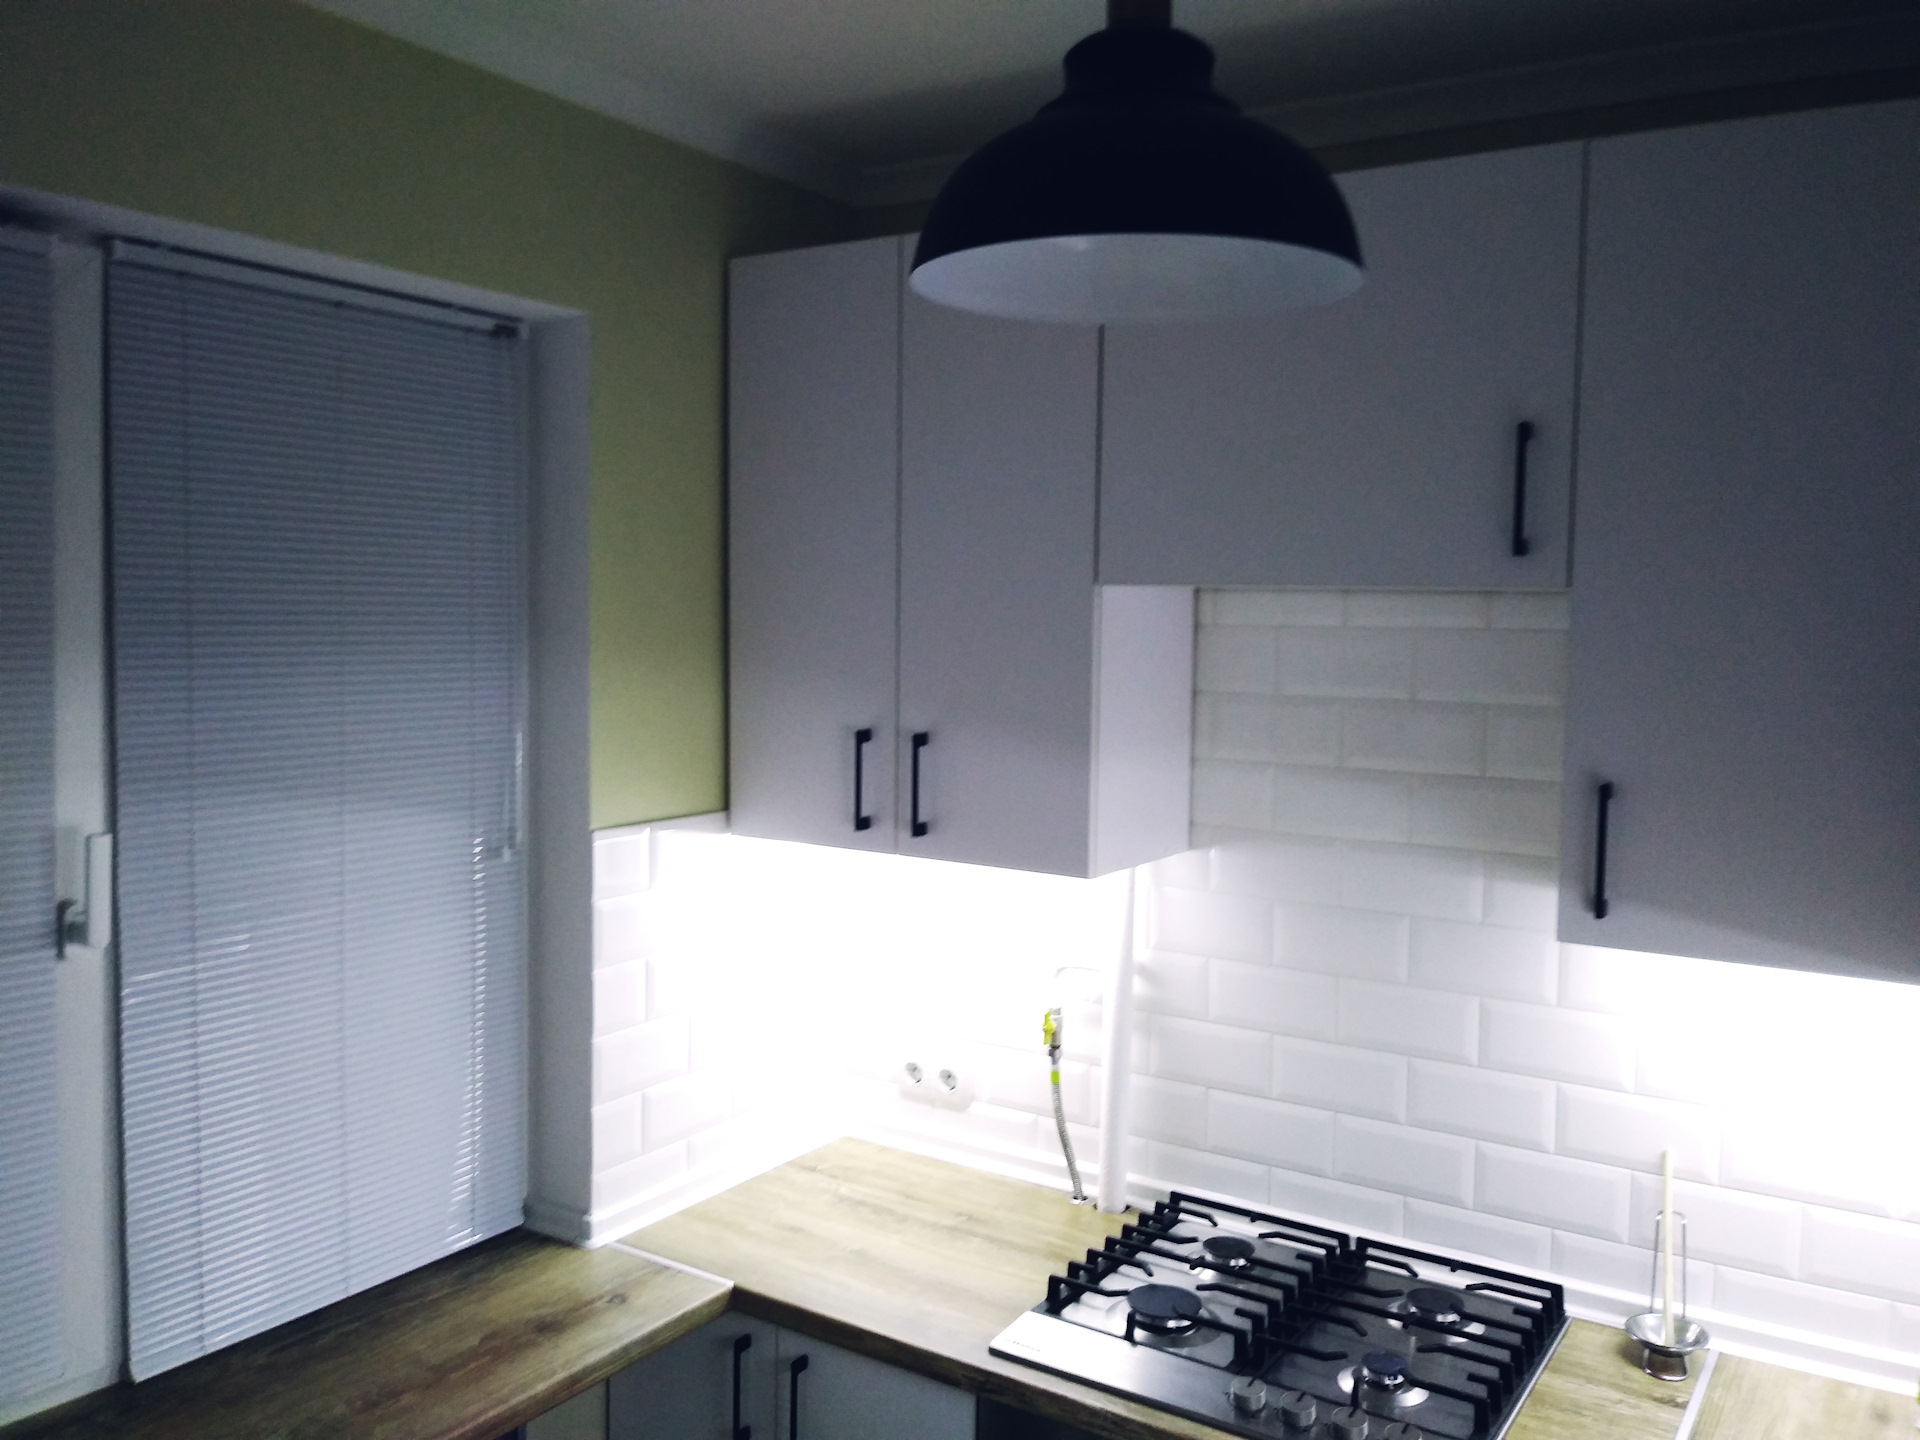 кухня без вытяжки над плитой фото дизайн